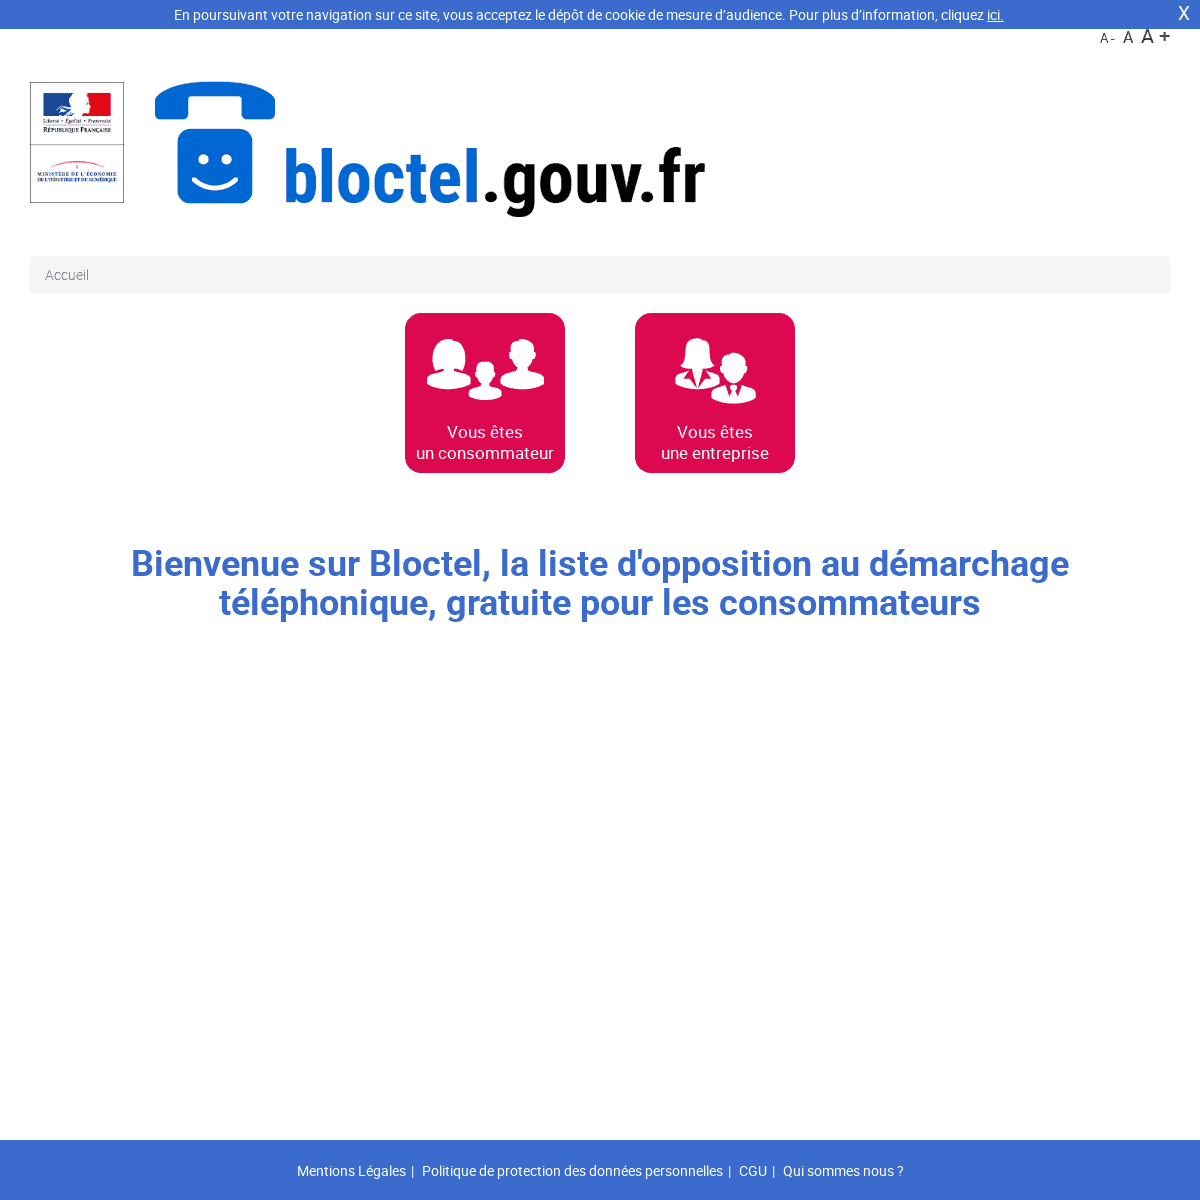 A complete backup of bloctel.fr